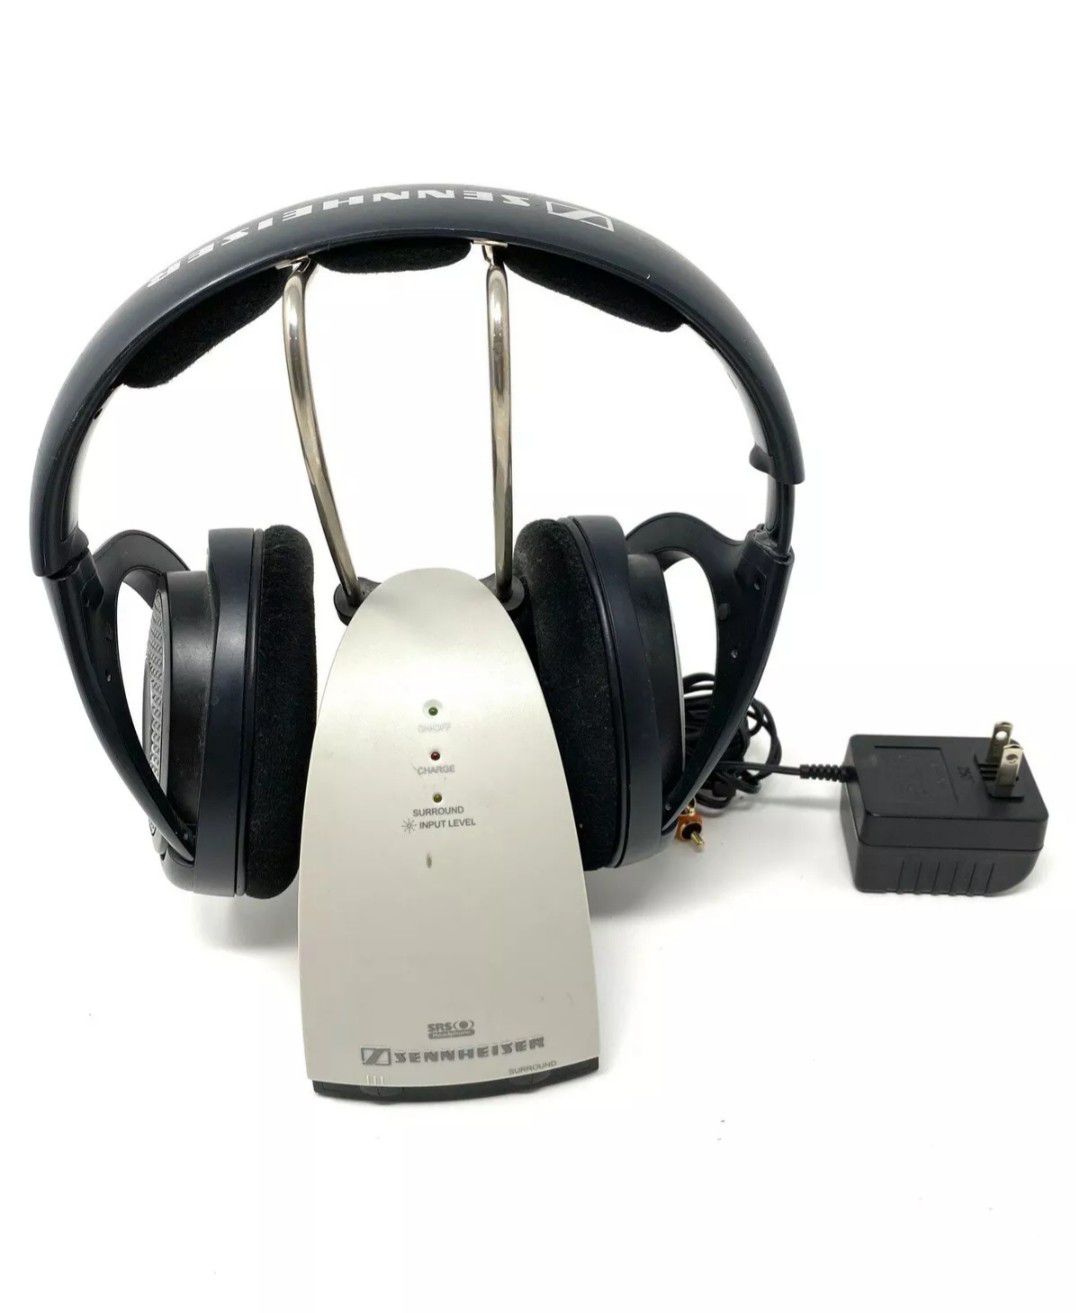 Sennheiser HDR 130 - headphones